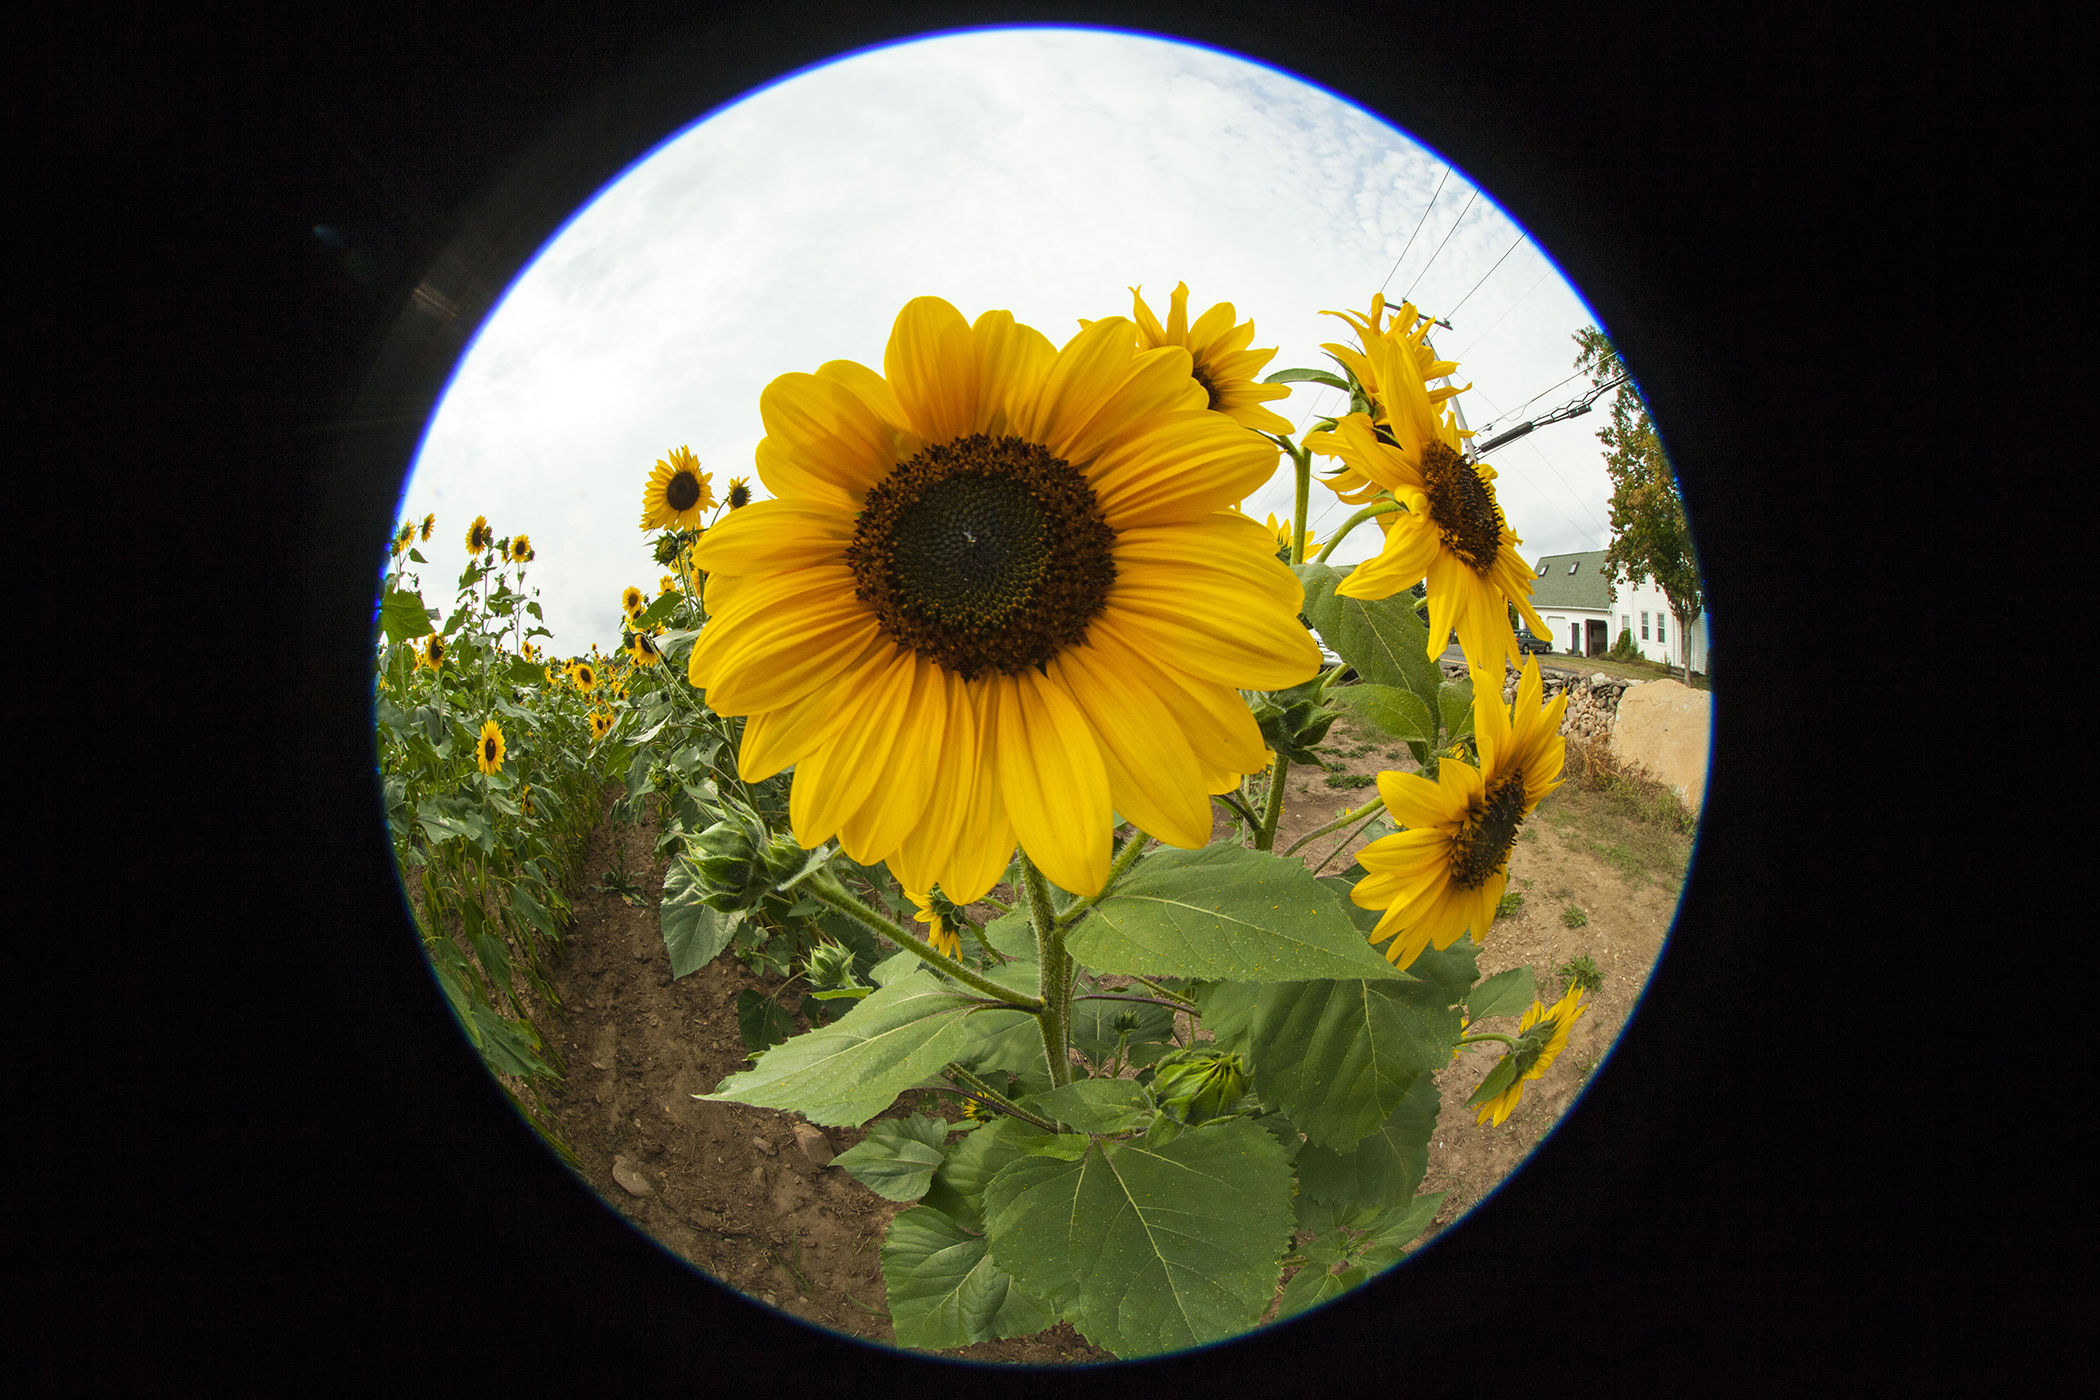 Glastonbury Sunflowers 2